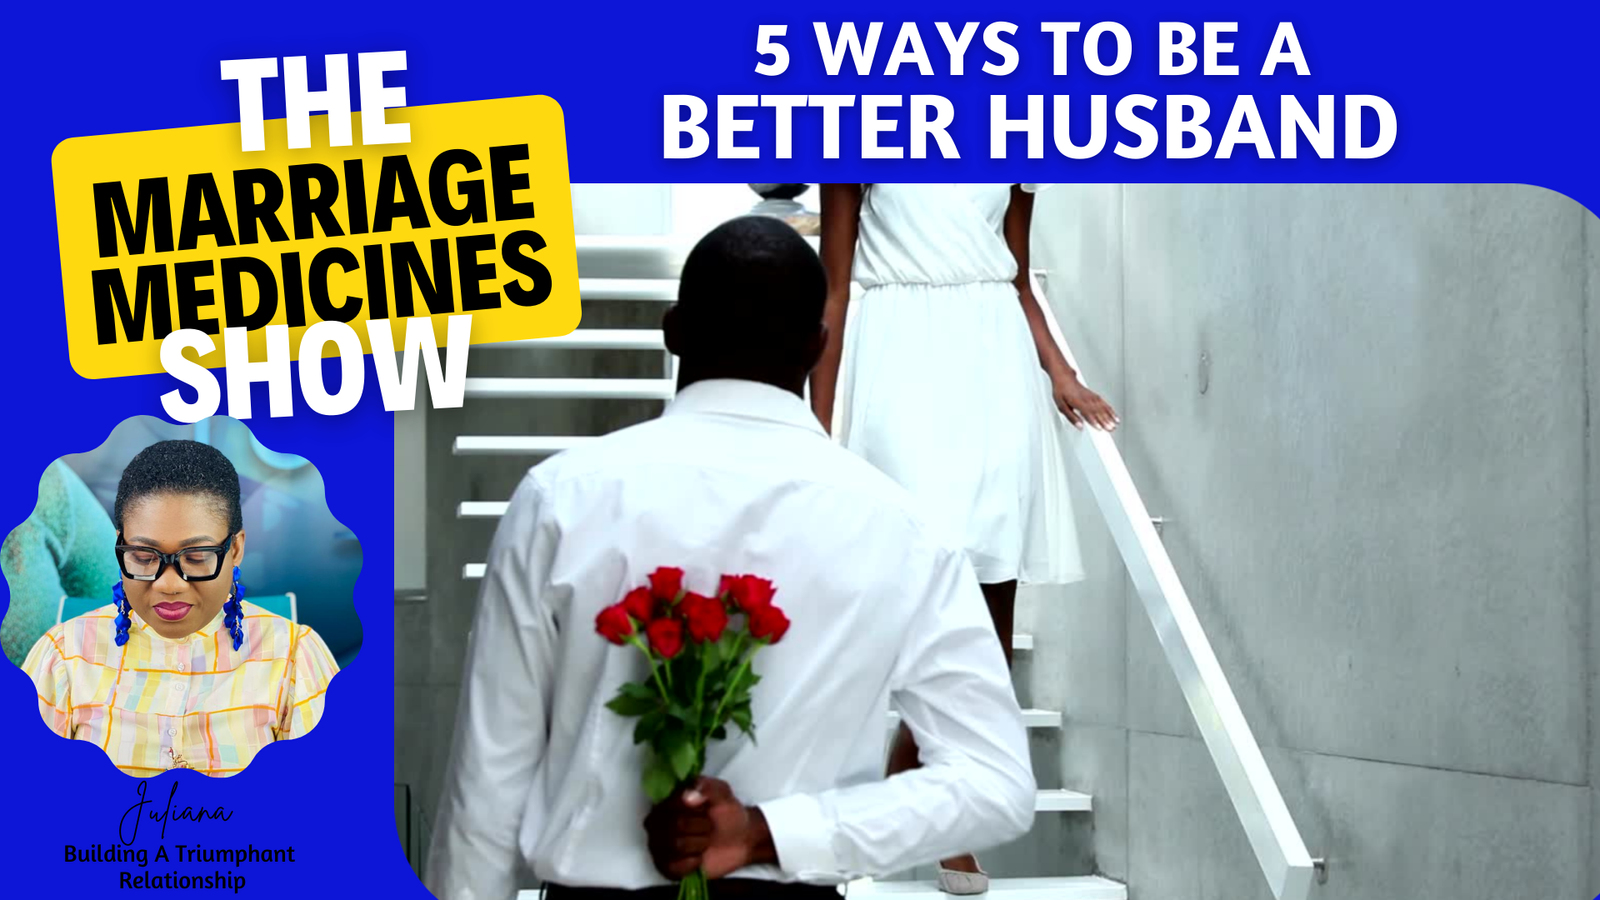 _ MMSI 21 - 5 WAYS TO BE A BETTER HUSBAND (1)